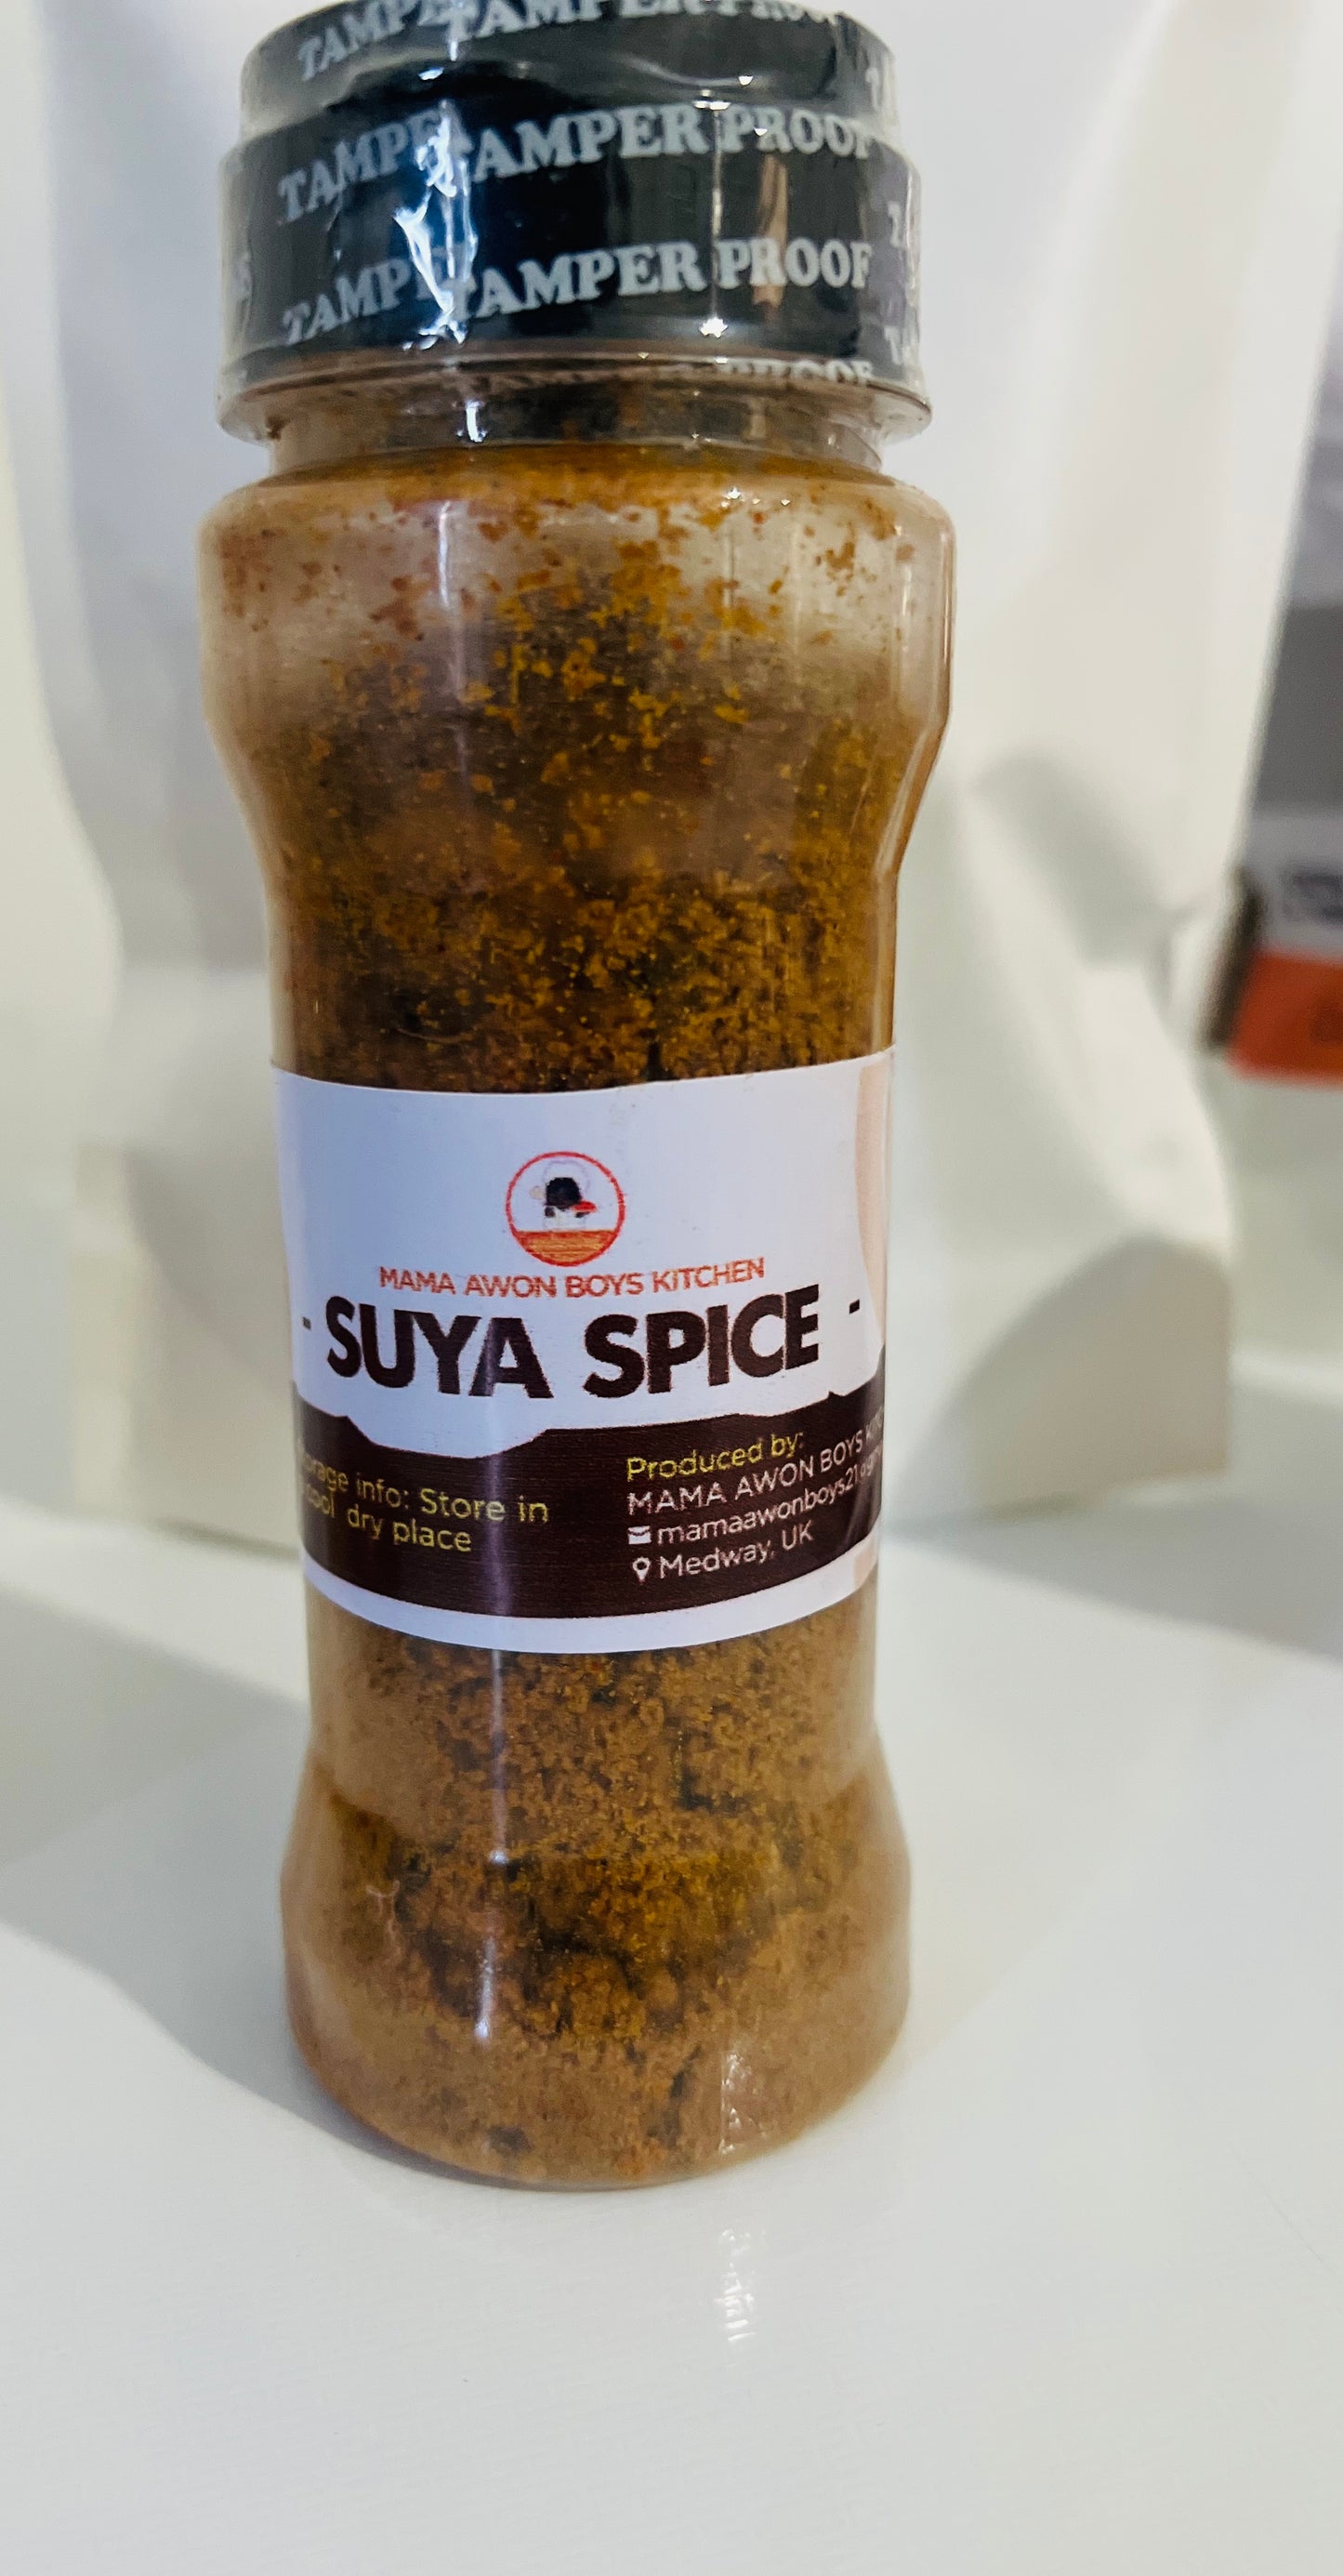 Suya spice